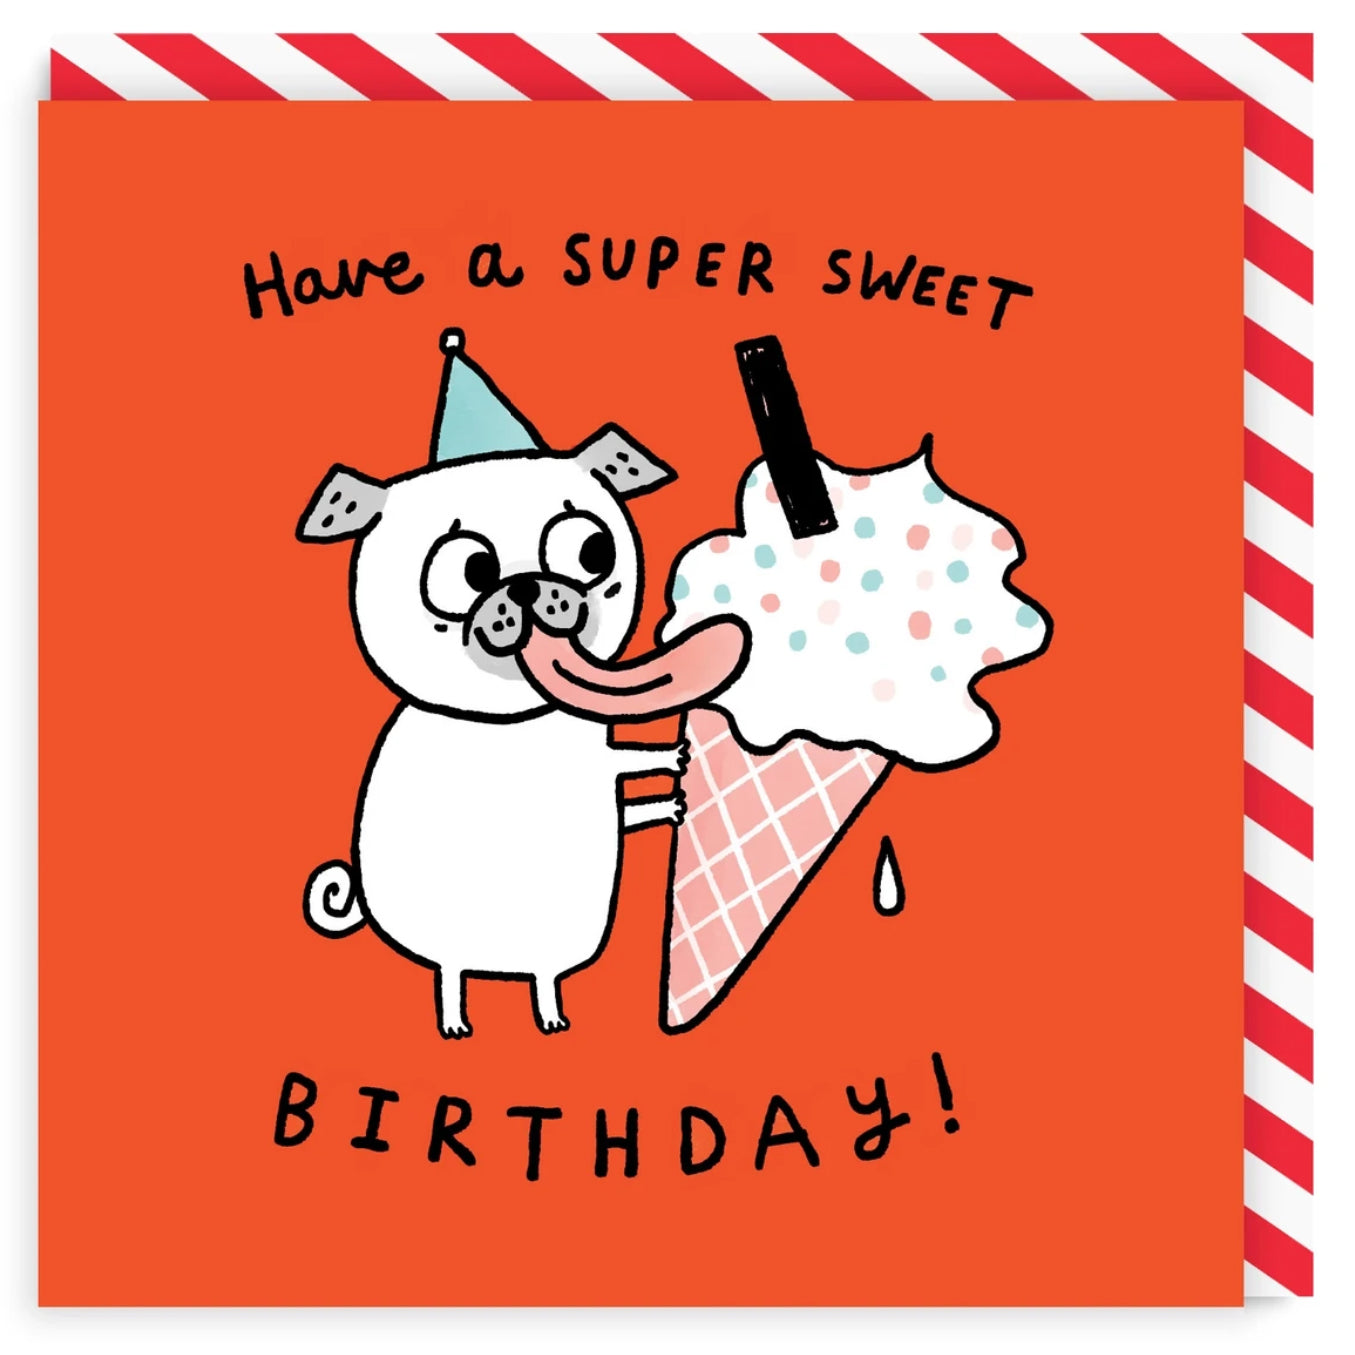 Super Sweet Birthday card